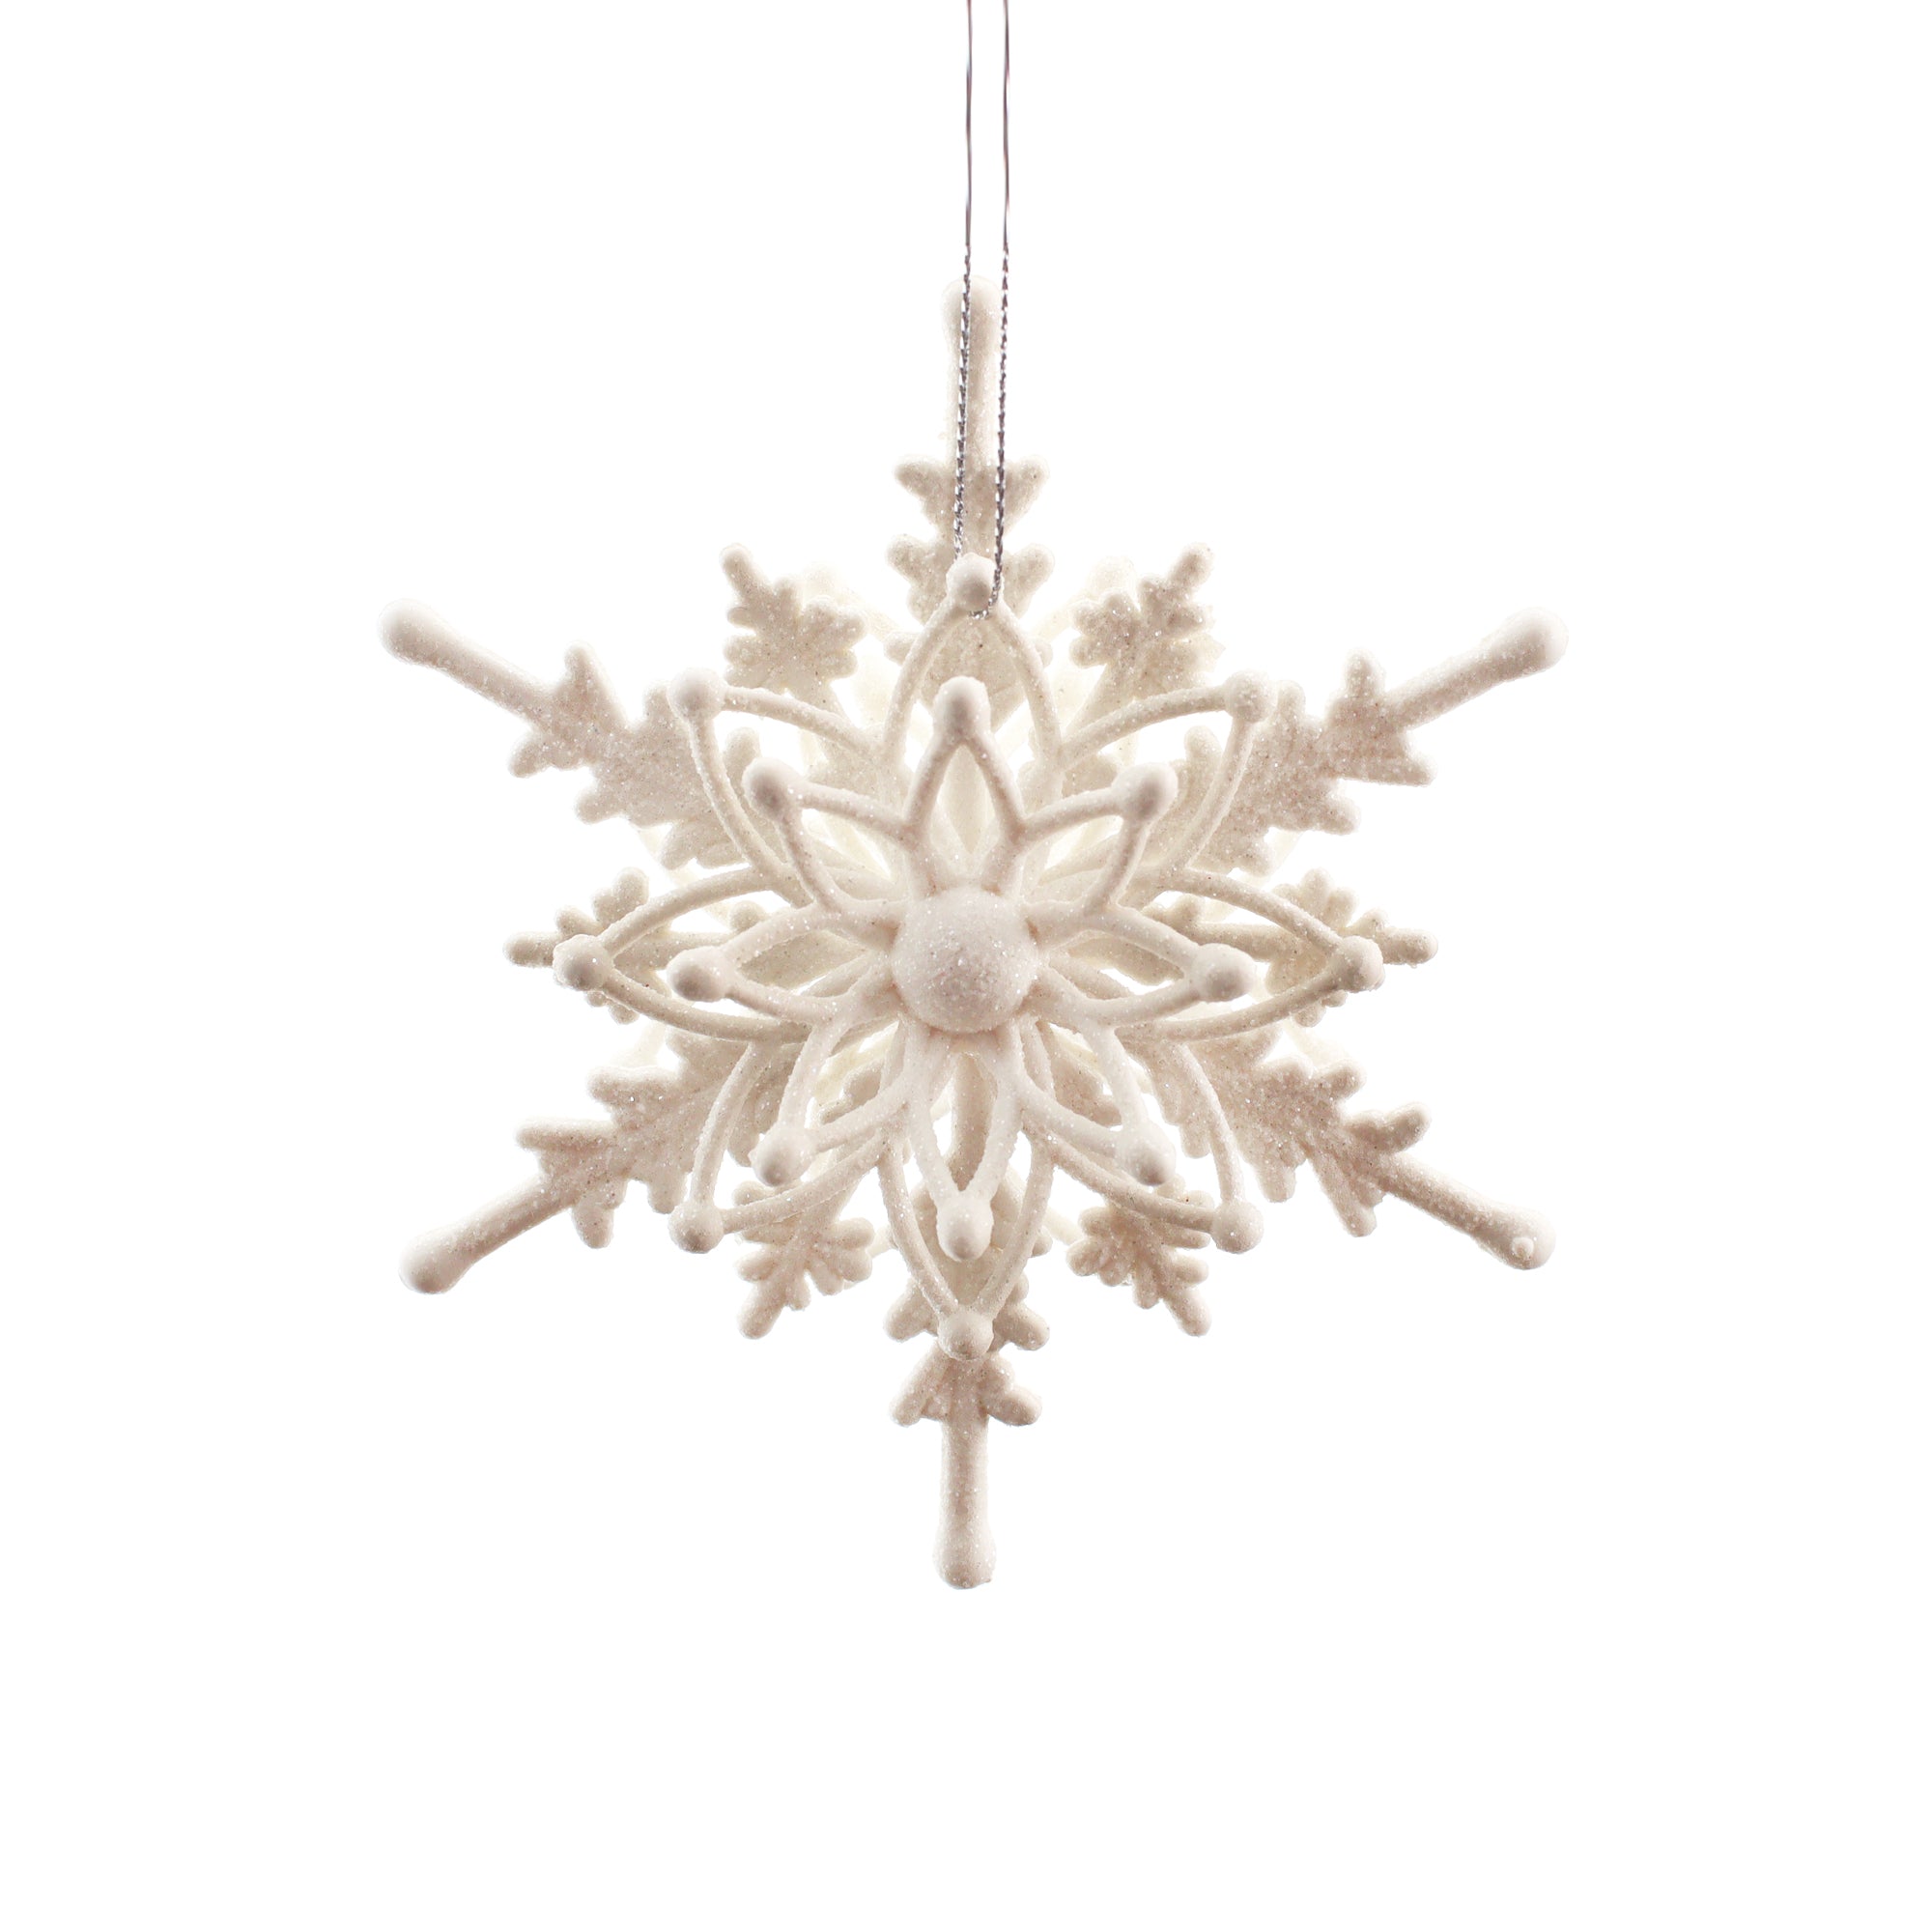 13cm 3D Snowflake Shatterproof Ornament 01201 - MODA FLORA Santa's Workshop